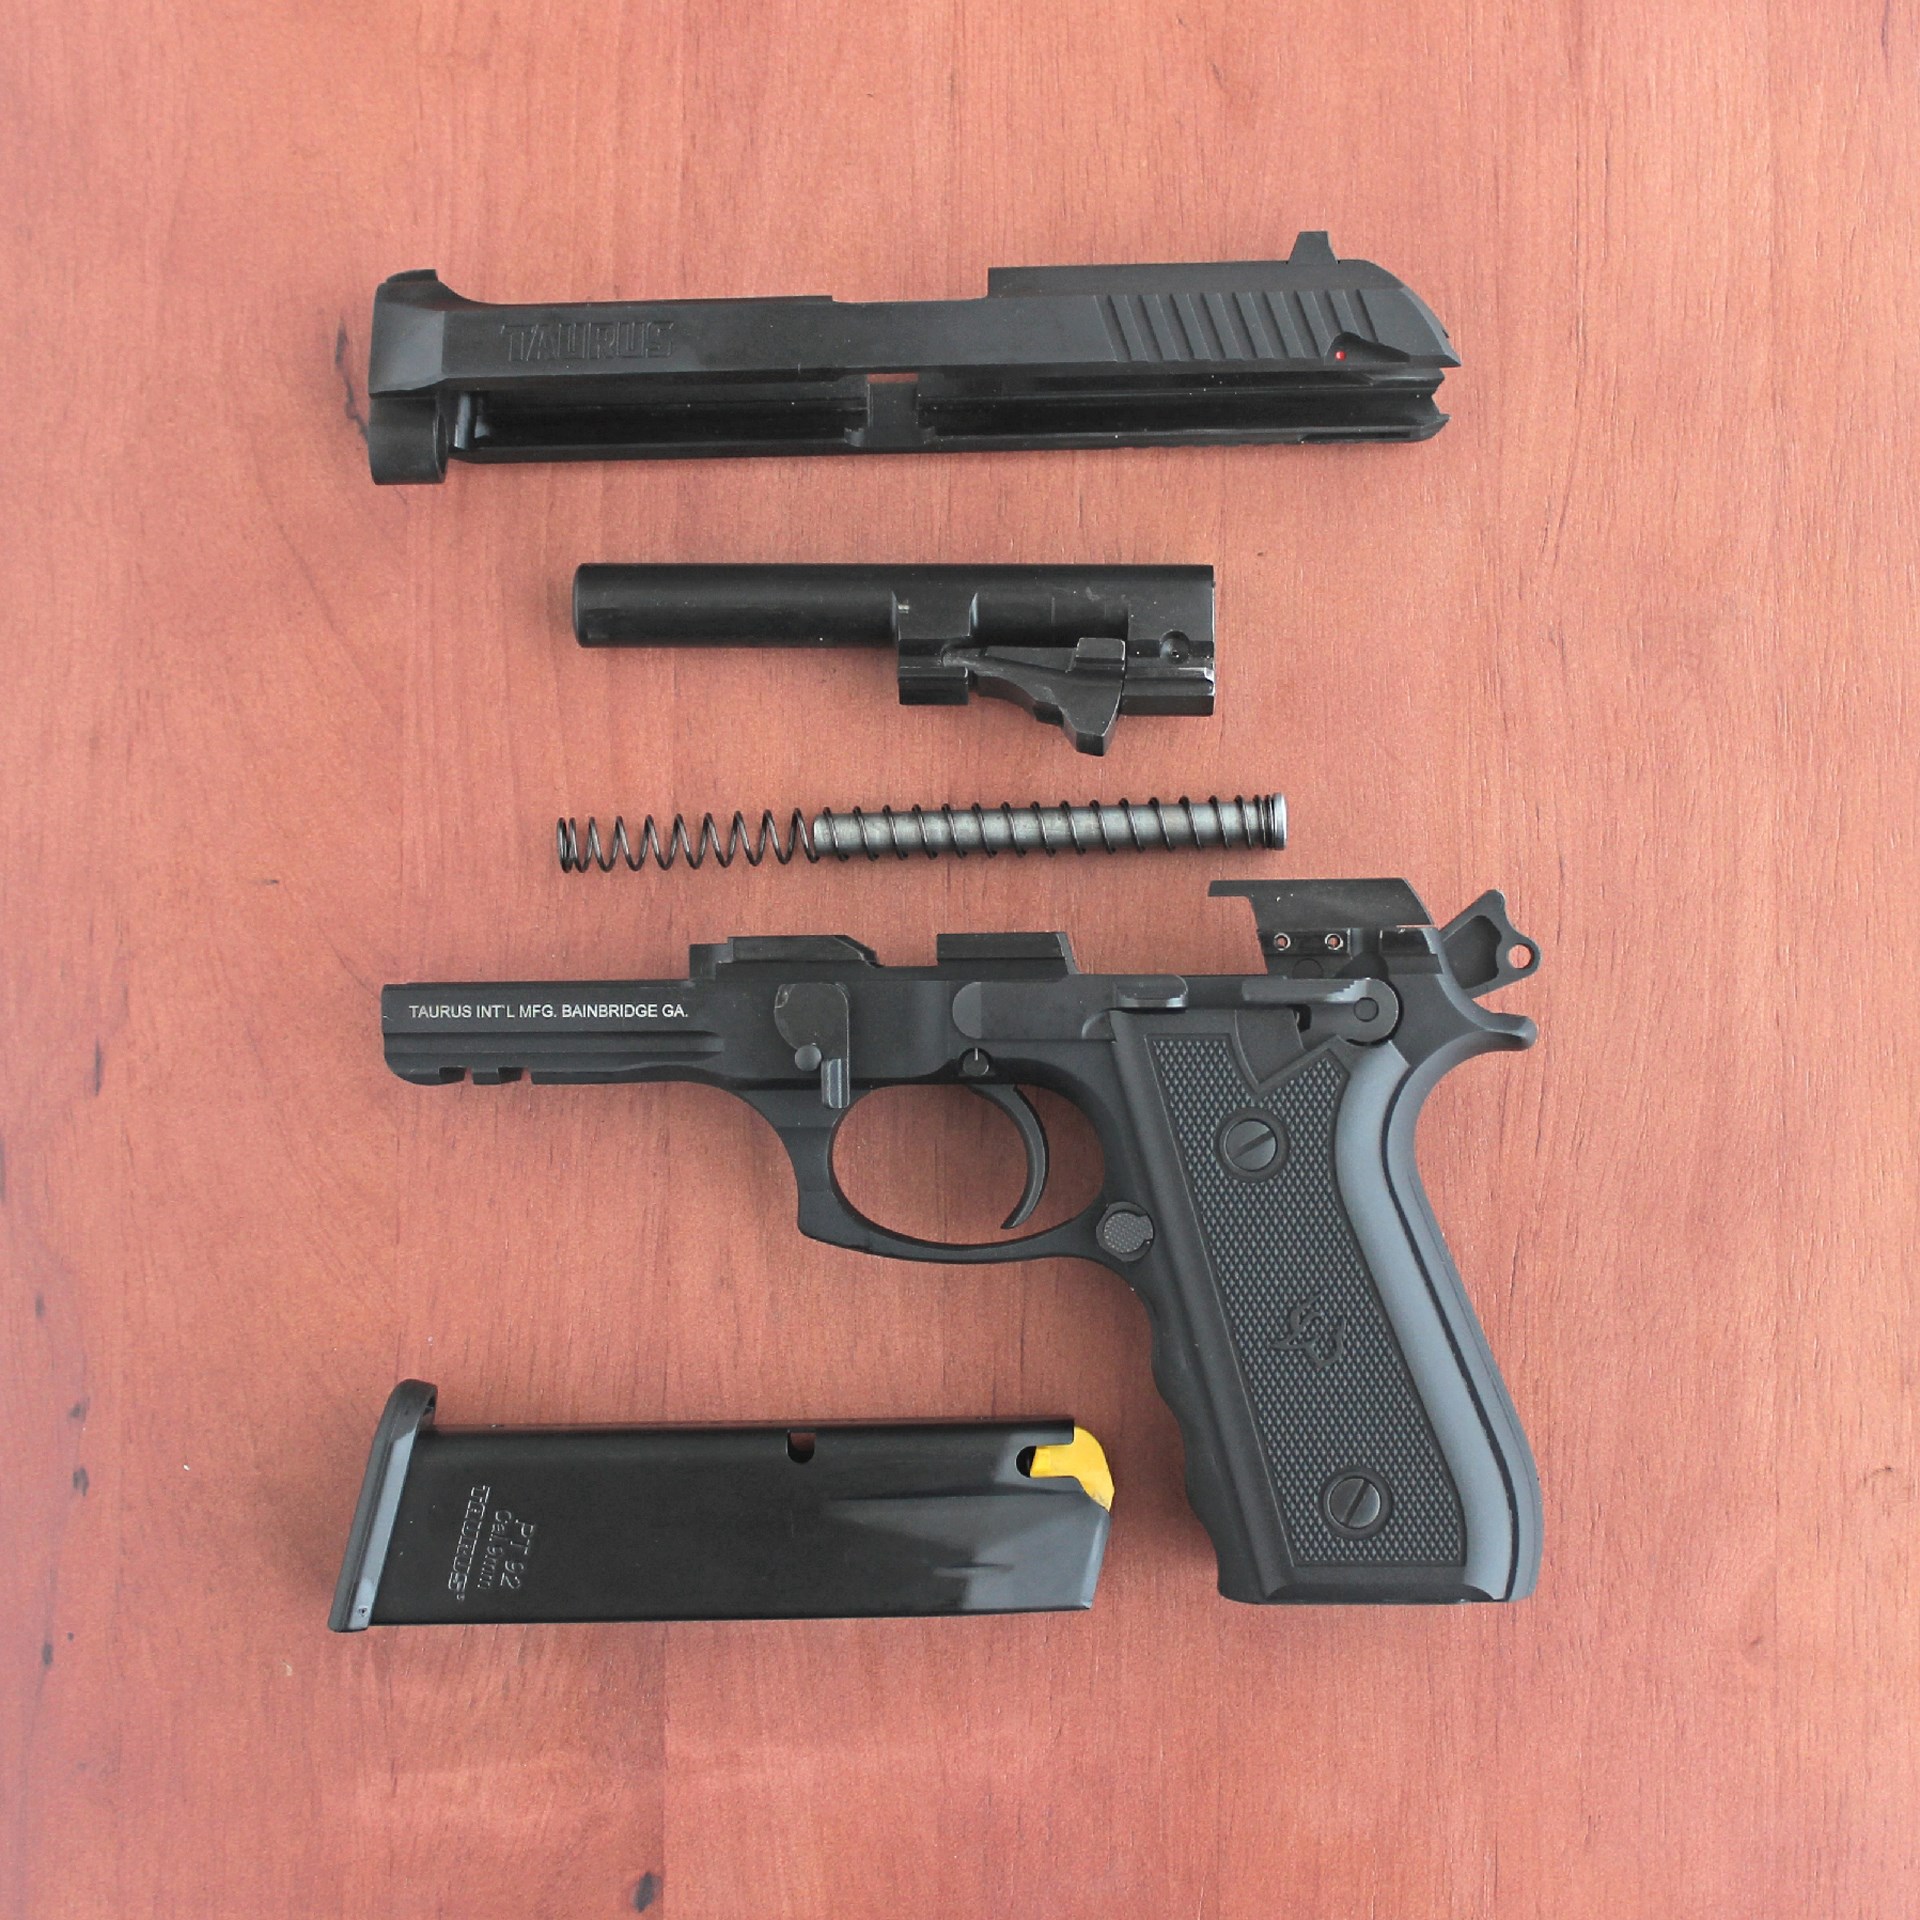 Taurus 917c pistol 9 mm disassembled view parts slide barrel spring frame magazine shown on wood